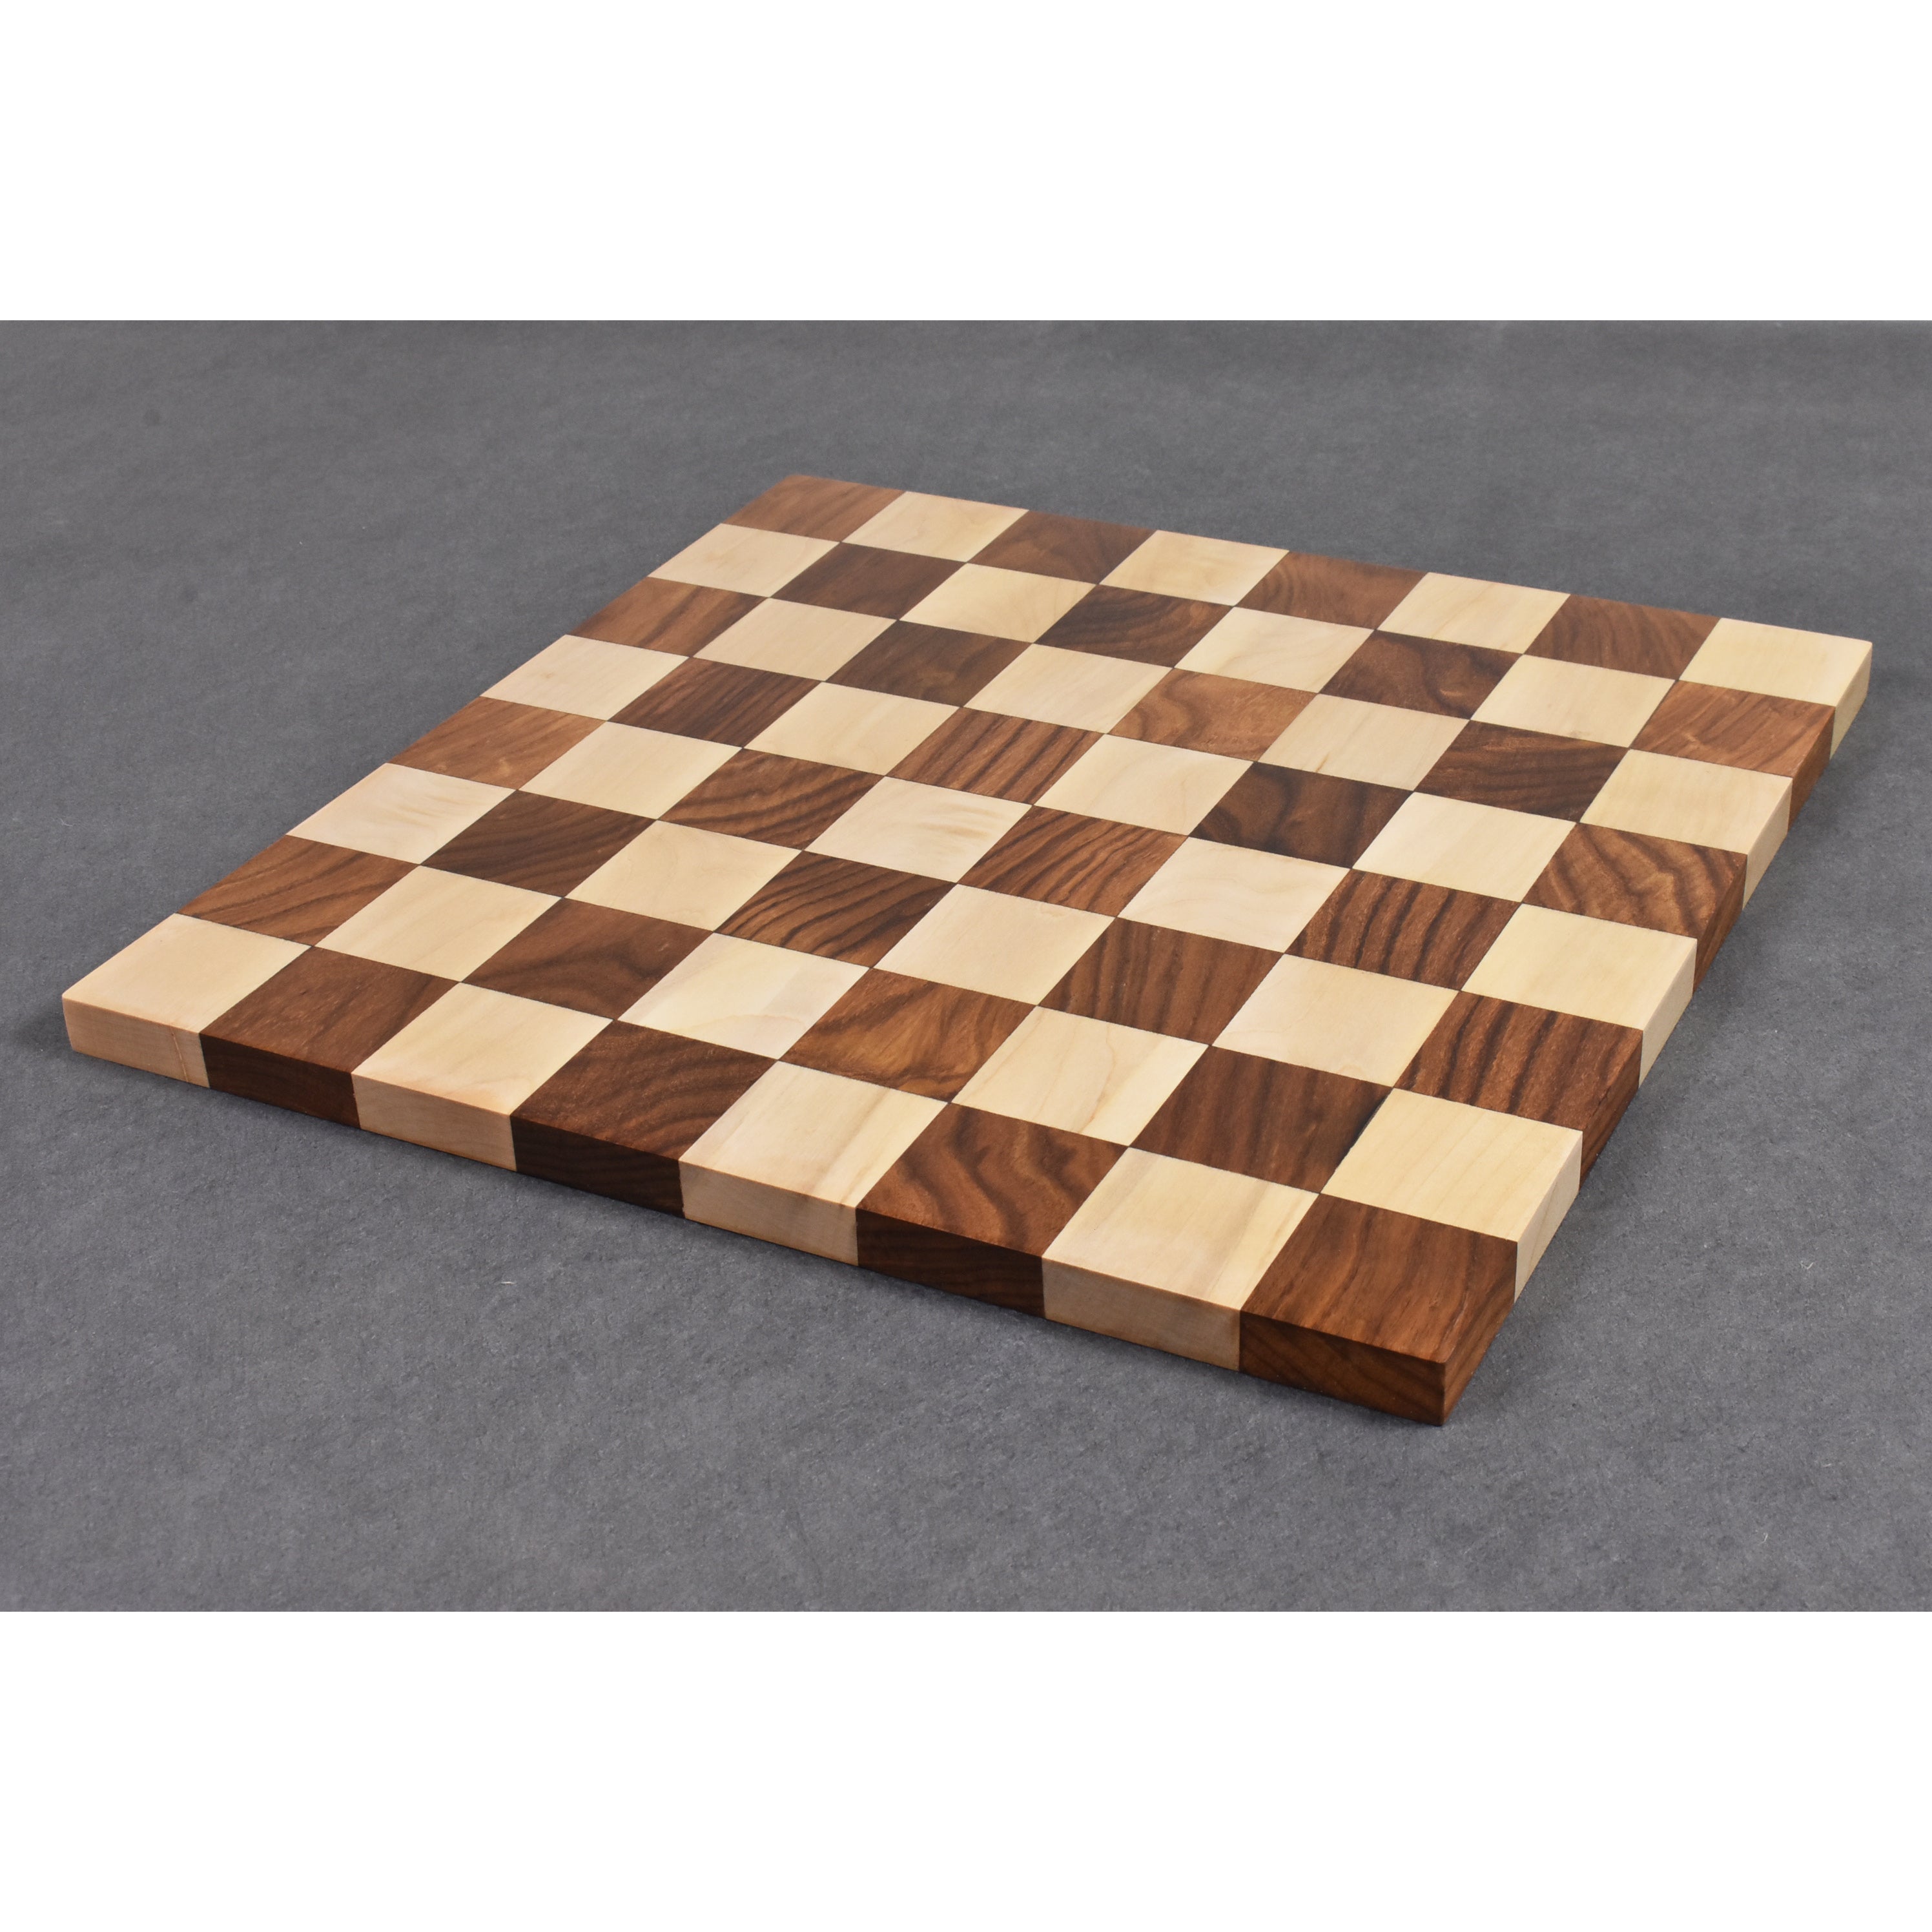 Slightly Imperfect Borderless Hardwood End Grain Chess Board